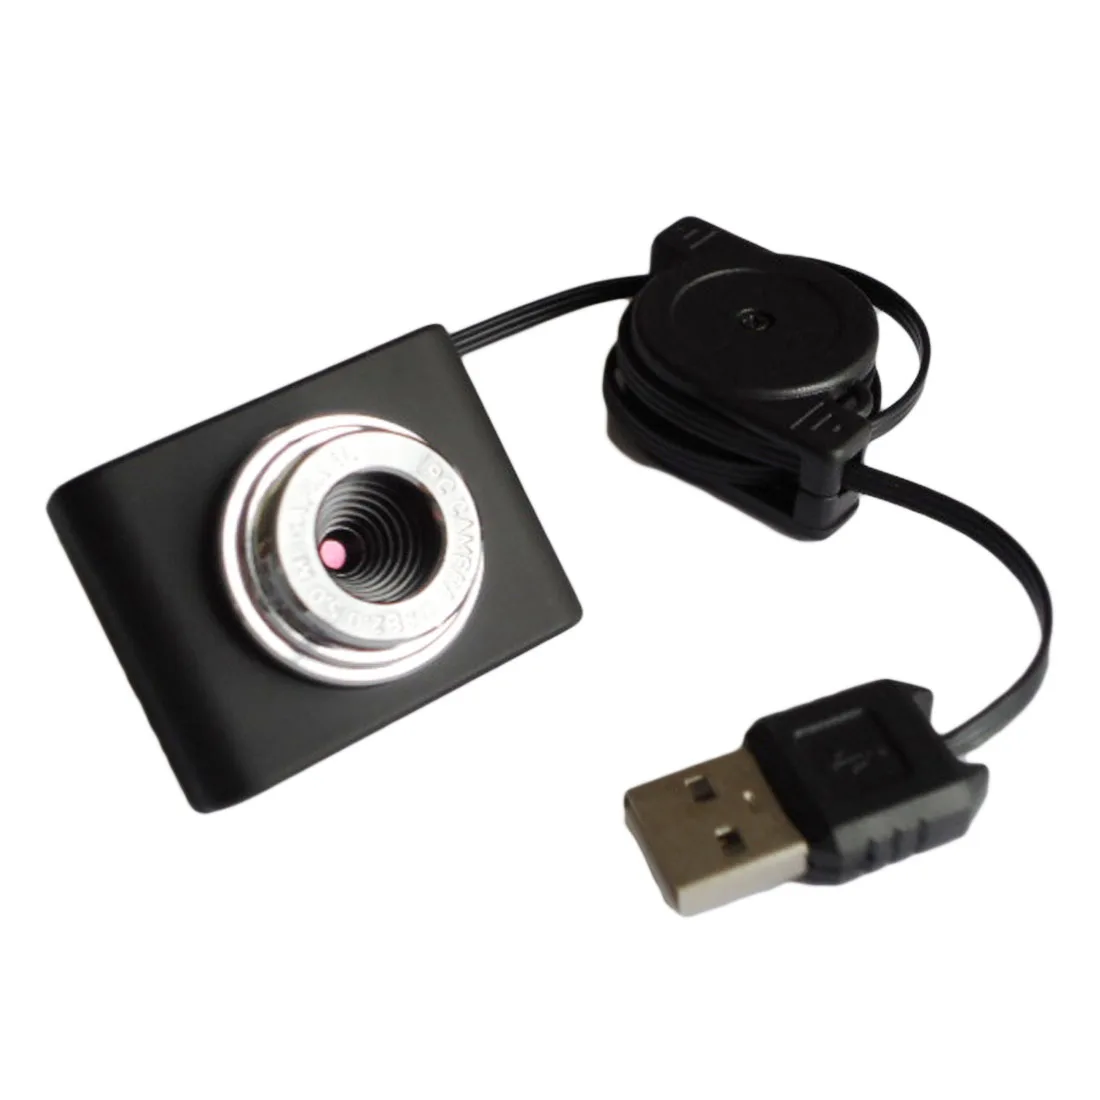 Etmakit Горячая Распродажа, черная мини USB 2,0 веб-камера, веб-камера, 30 мегапикселей, веб-камера, камера для компьютера, ПК, ноутбука